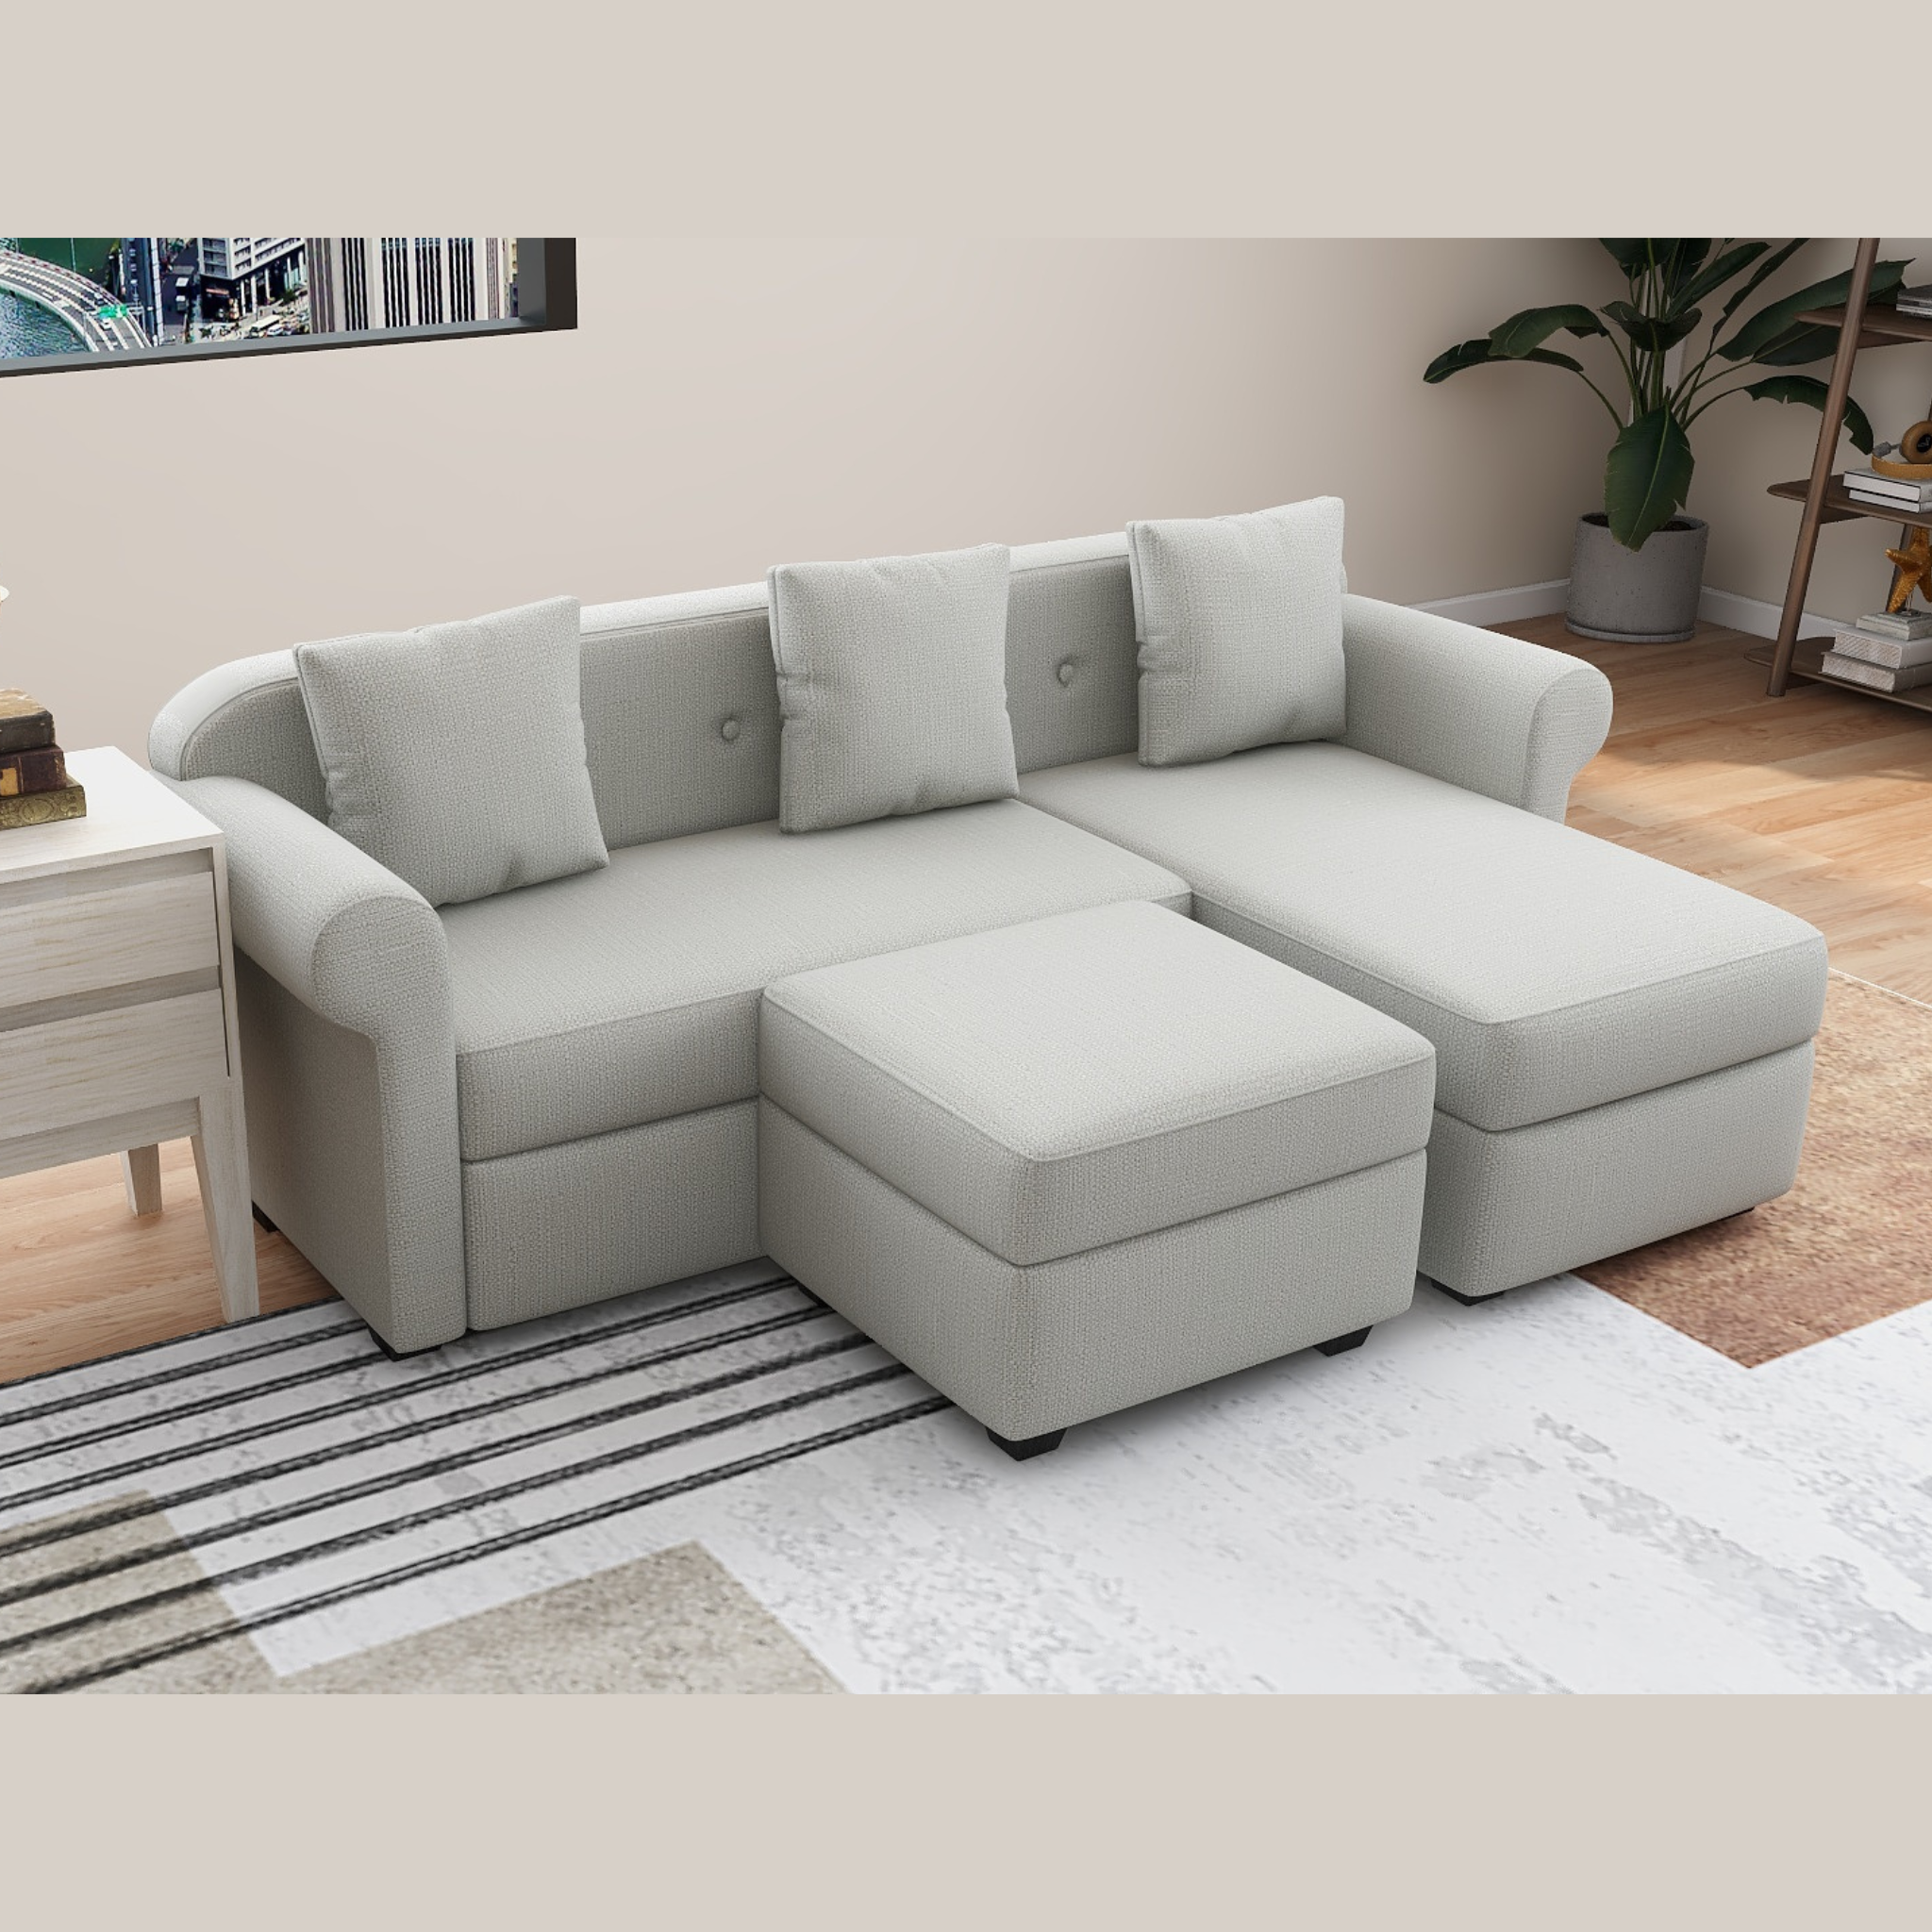 ROME L-SHAPE Fabric Sofa with Ottoman AF Home